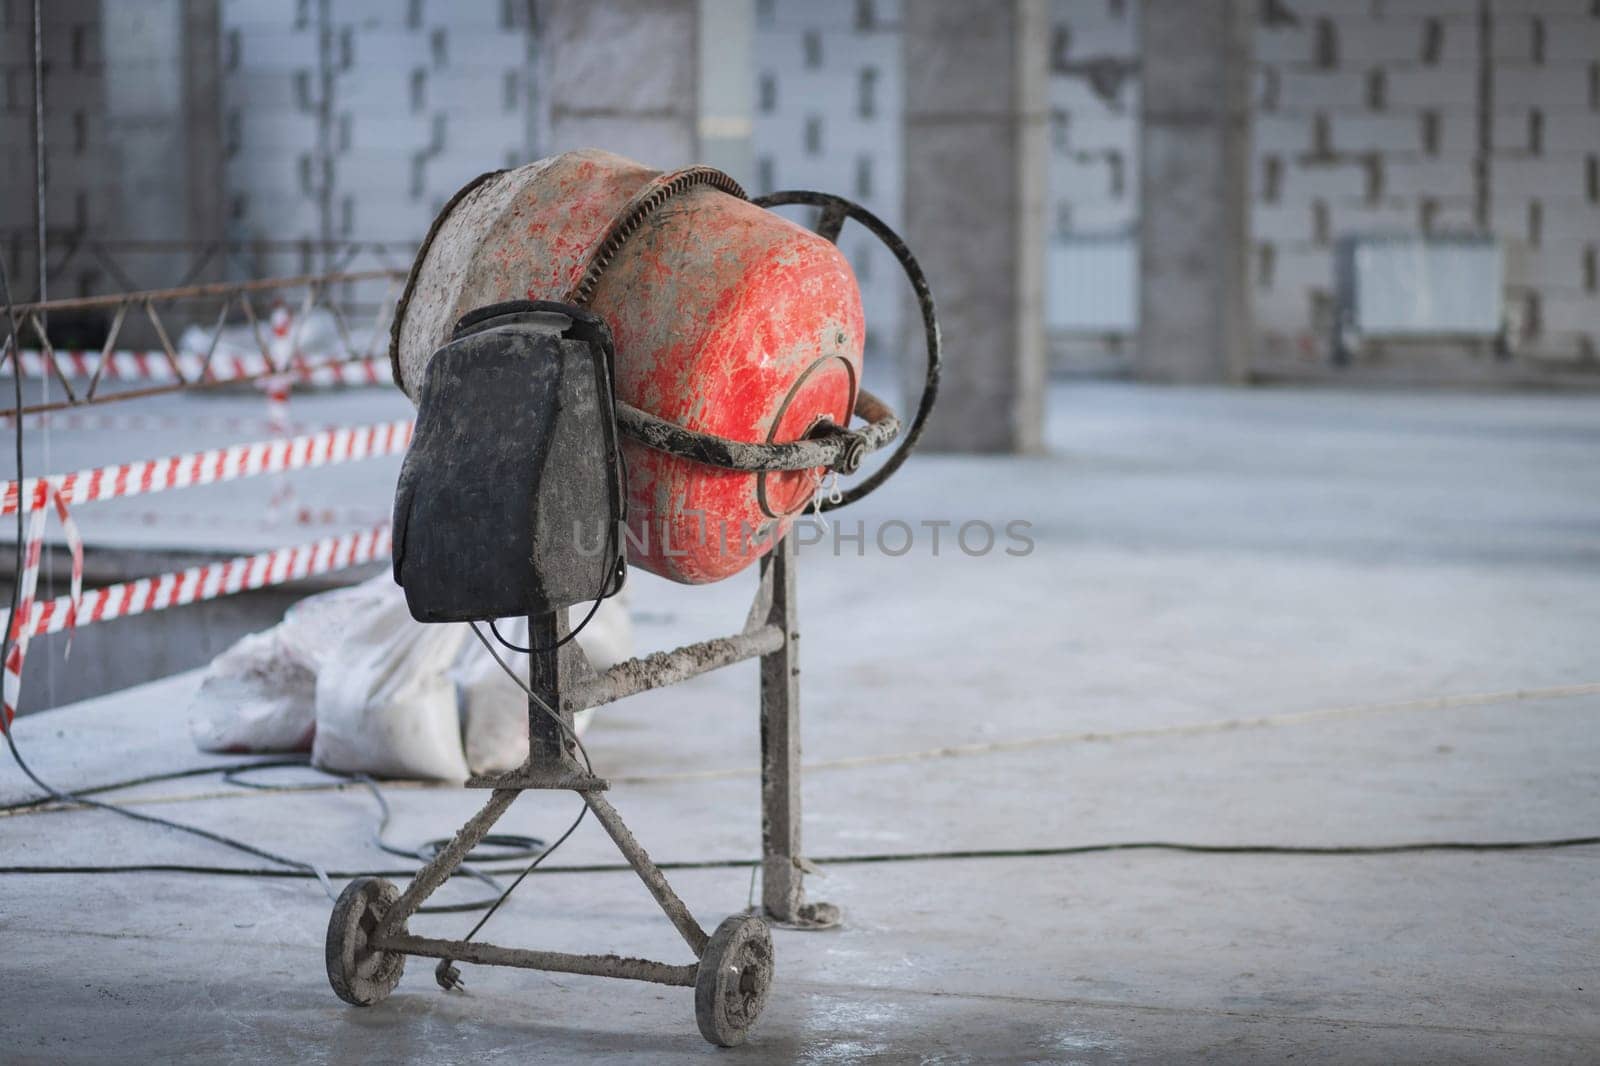 Electric concrete mixer at a construction site, copy space by Rom4ek